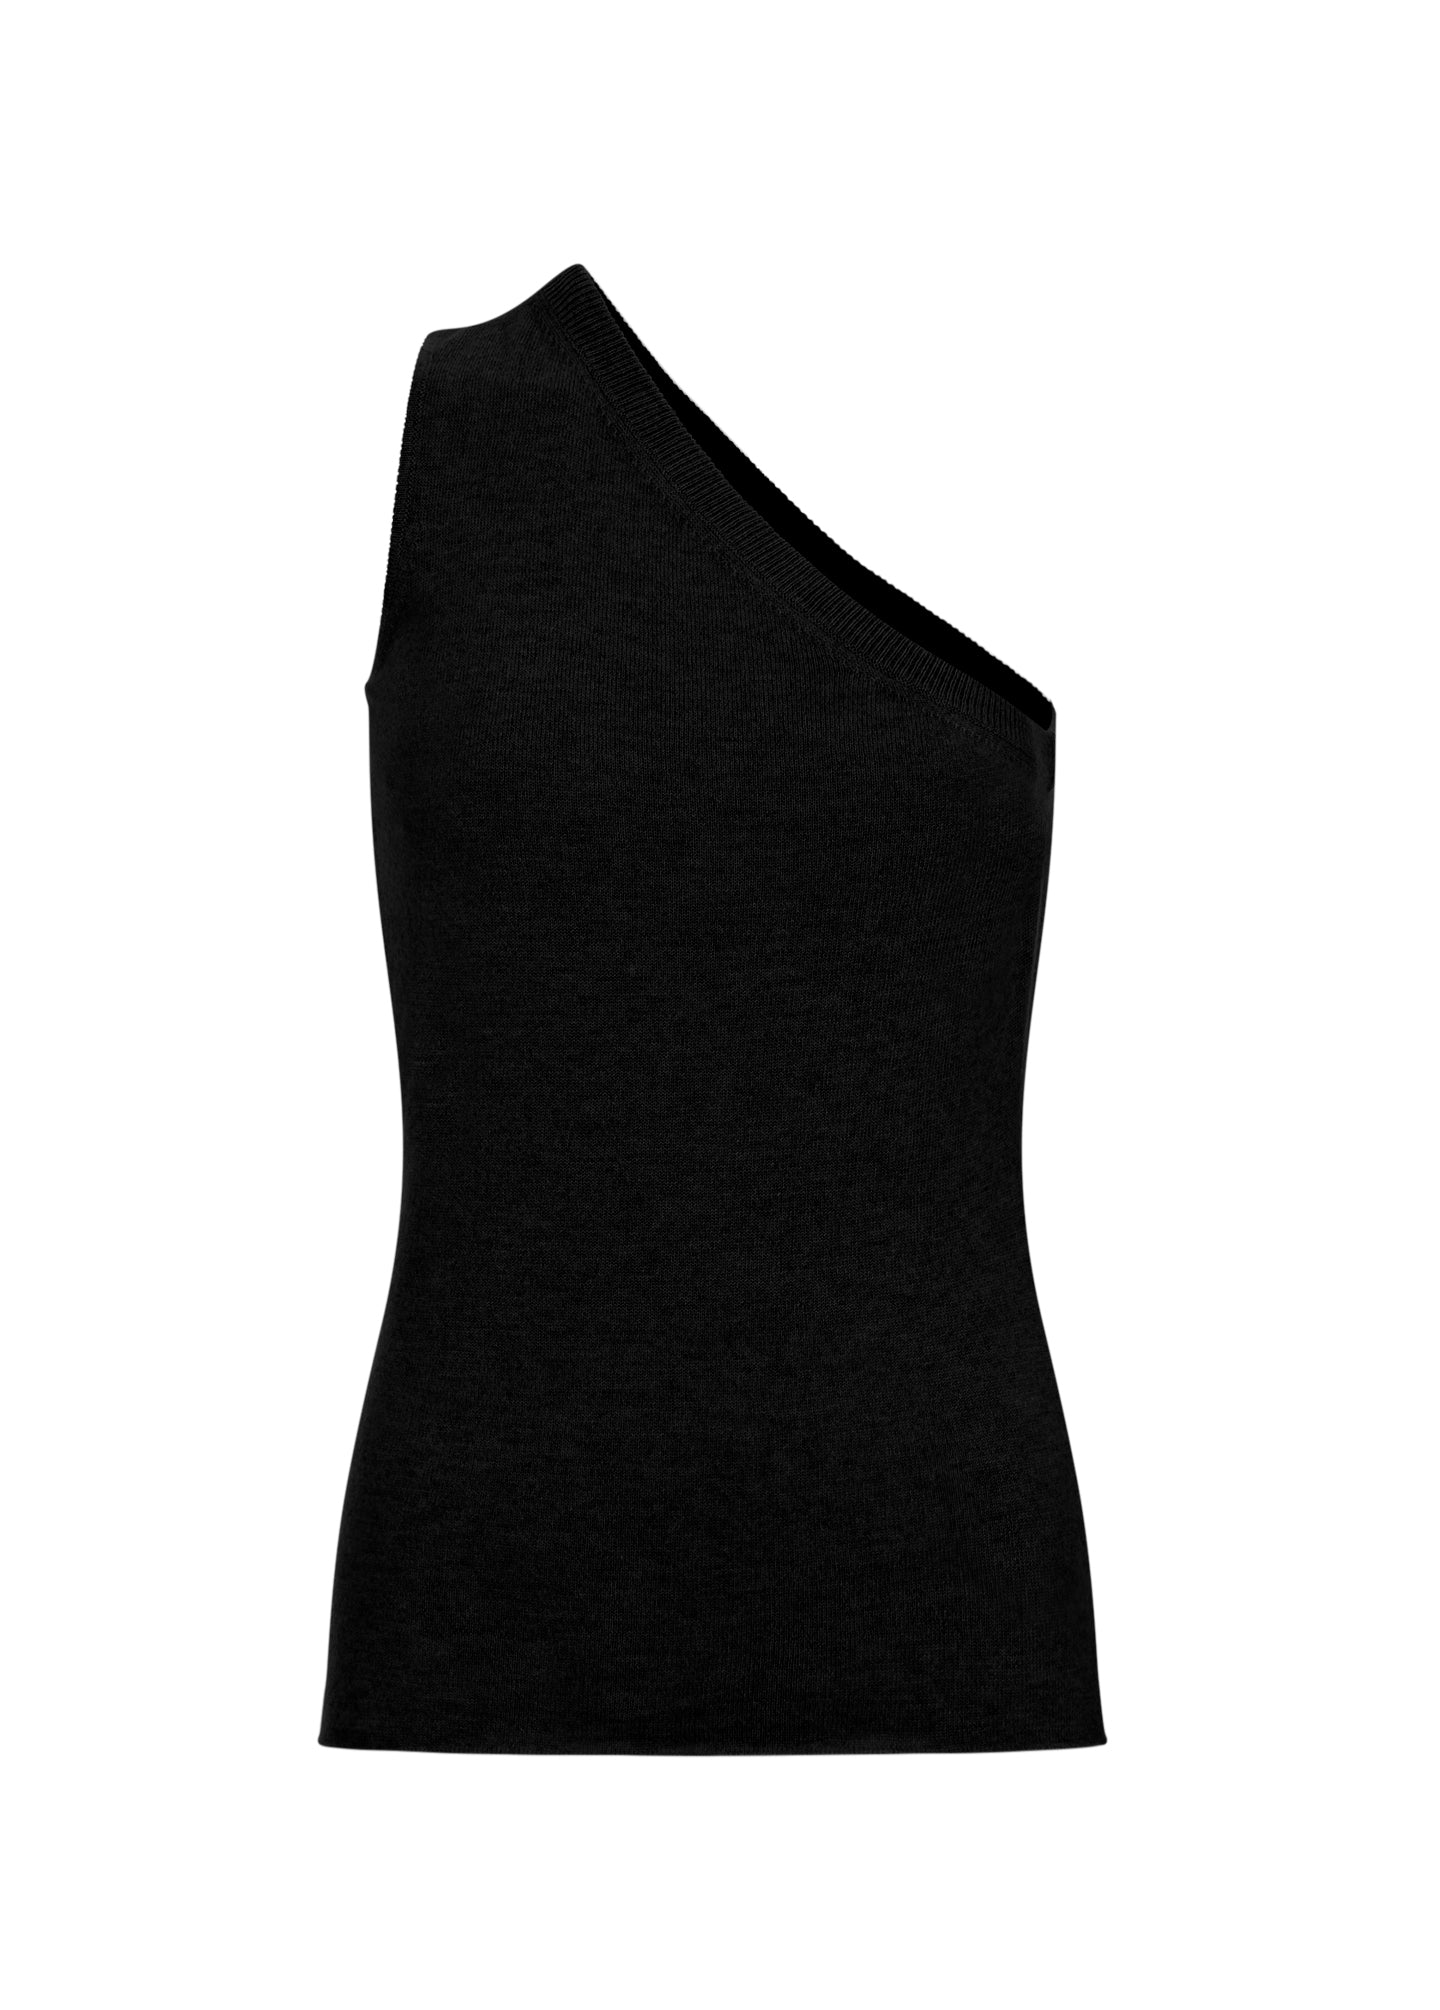 Designer cashmere asymmetrical one shoulder sleeveless top Black 